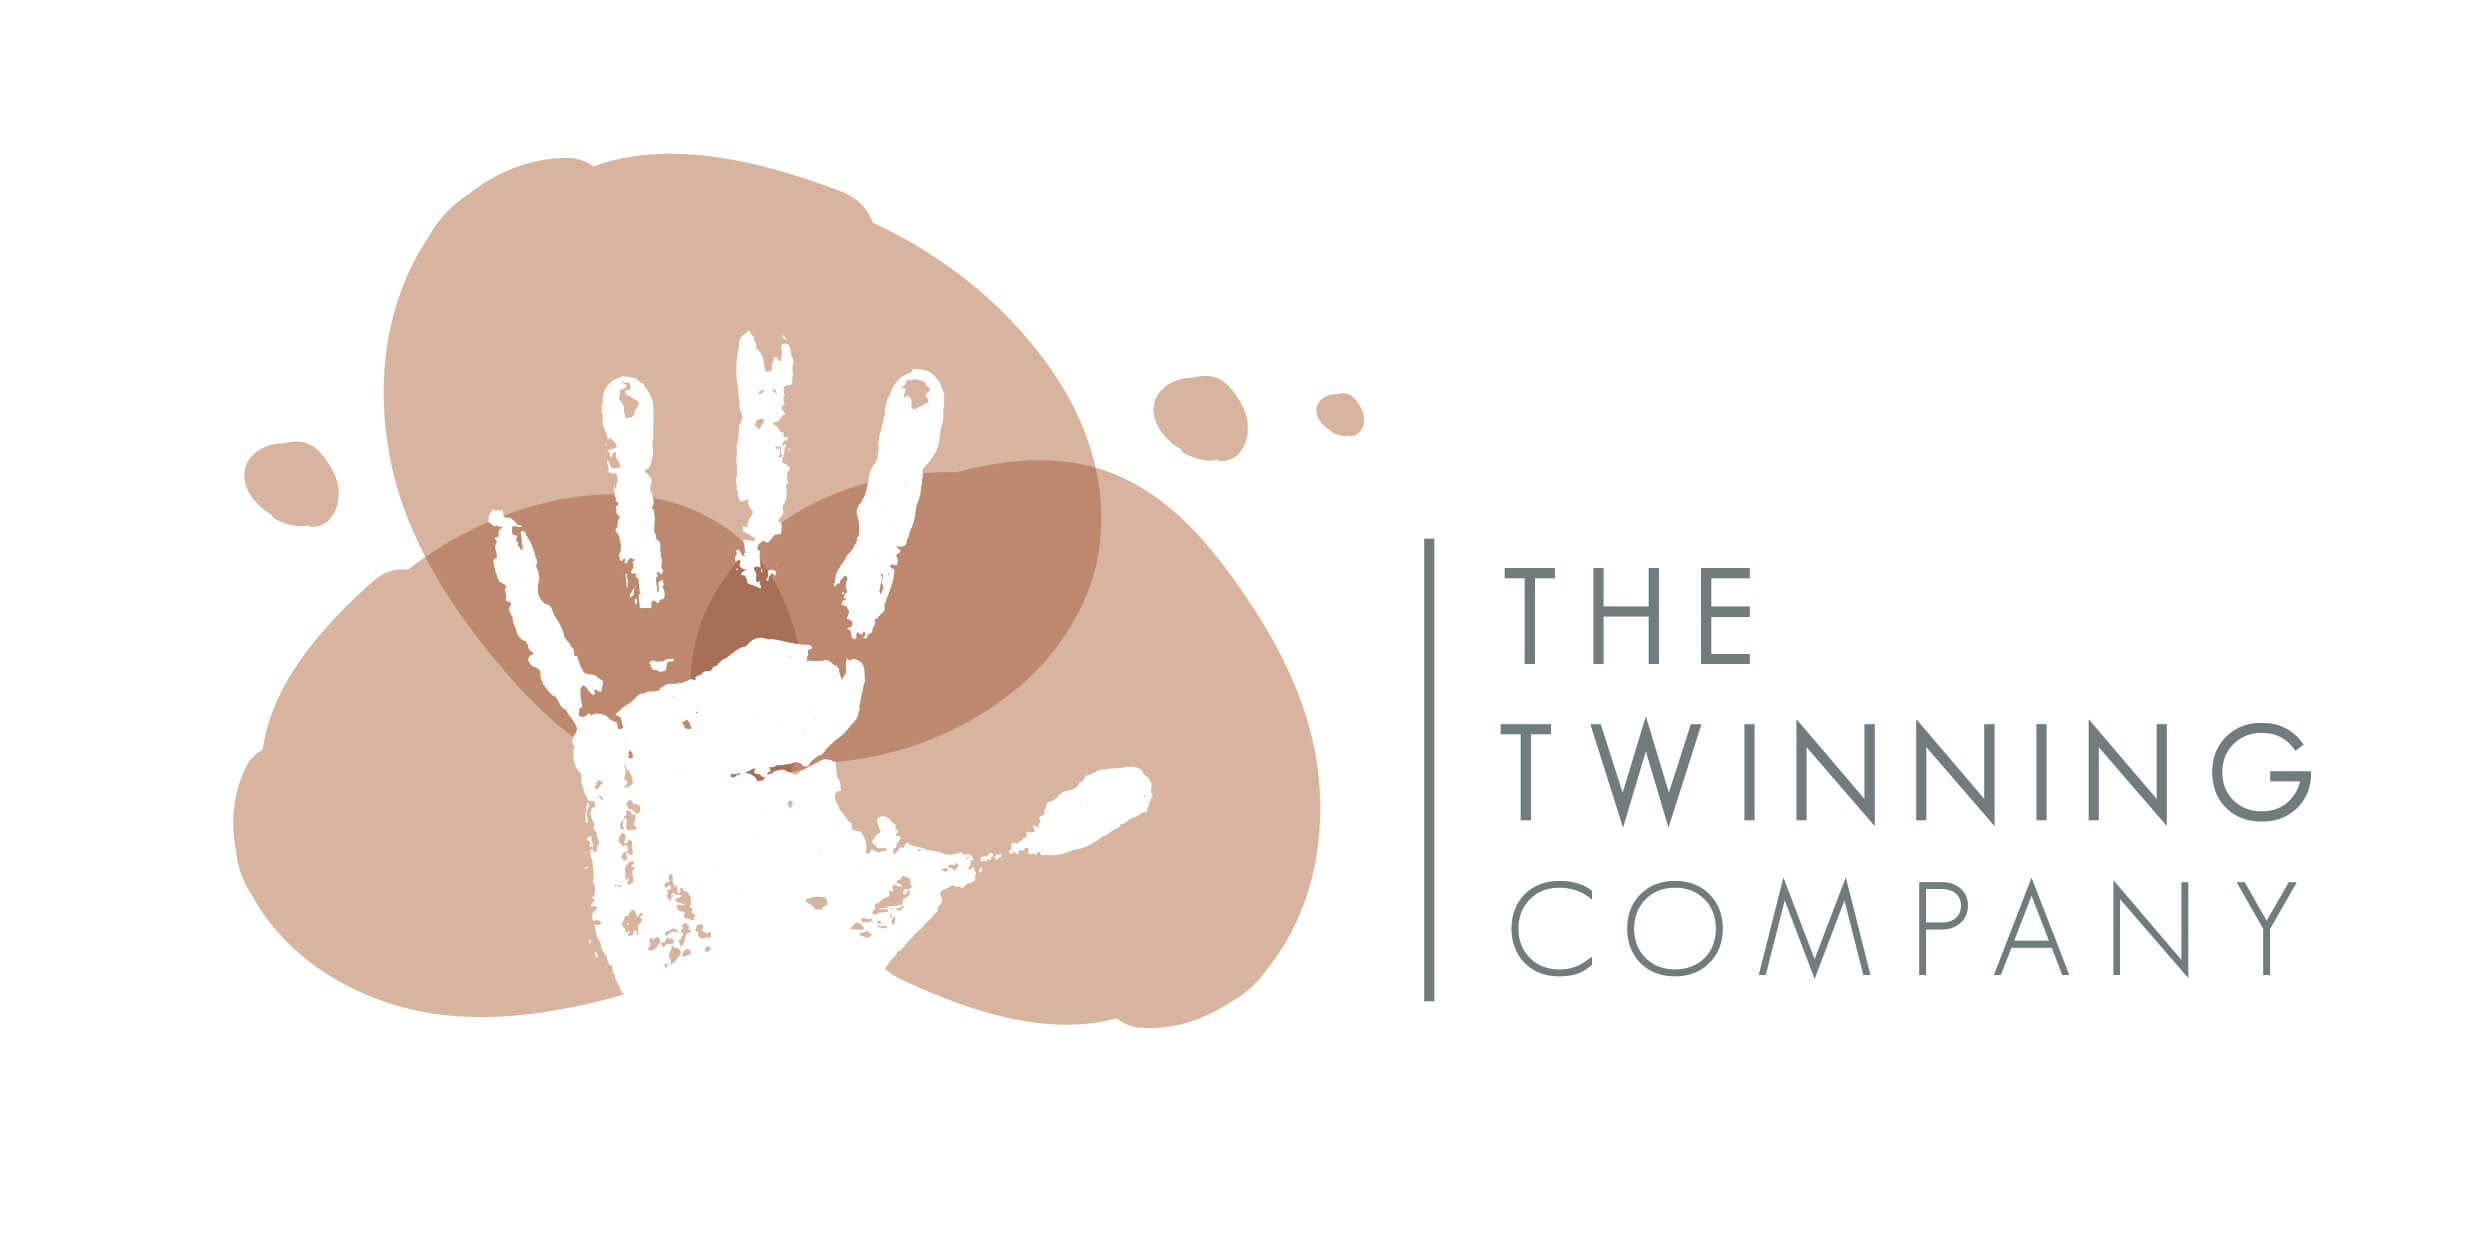 The Twinning Company